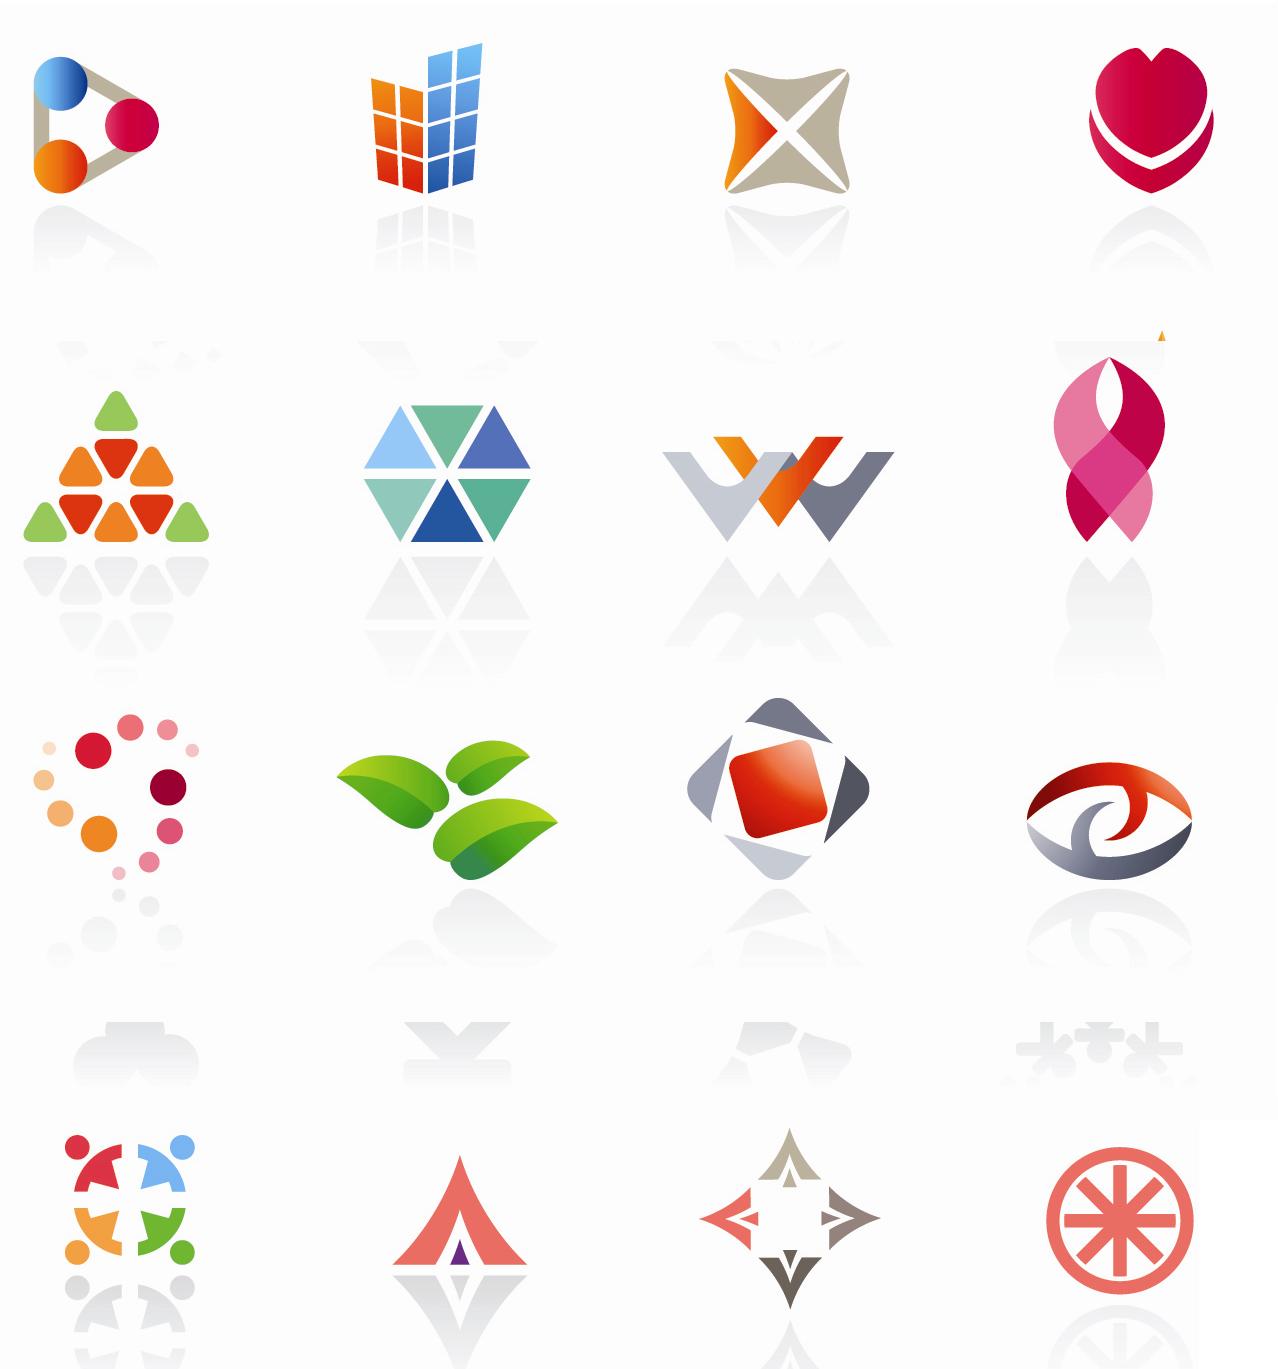 15 Version Of A Vector Logo Images - Shutterstock Logo Vector, YouTube